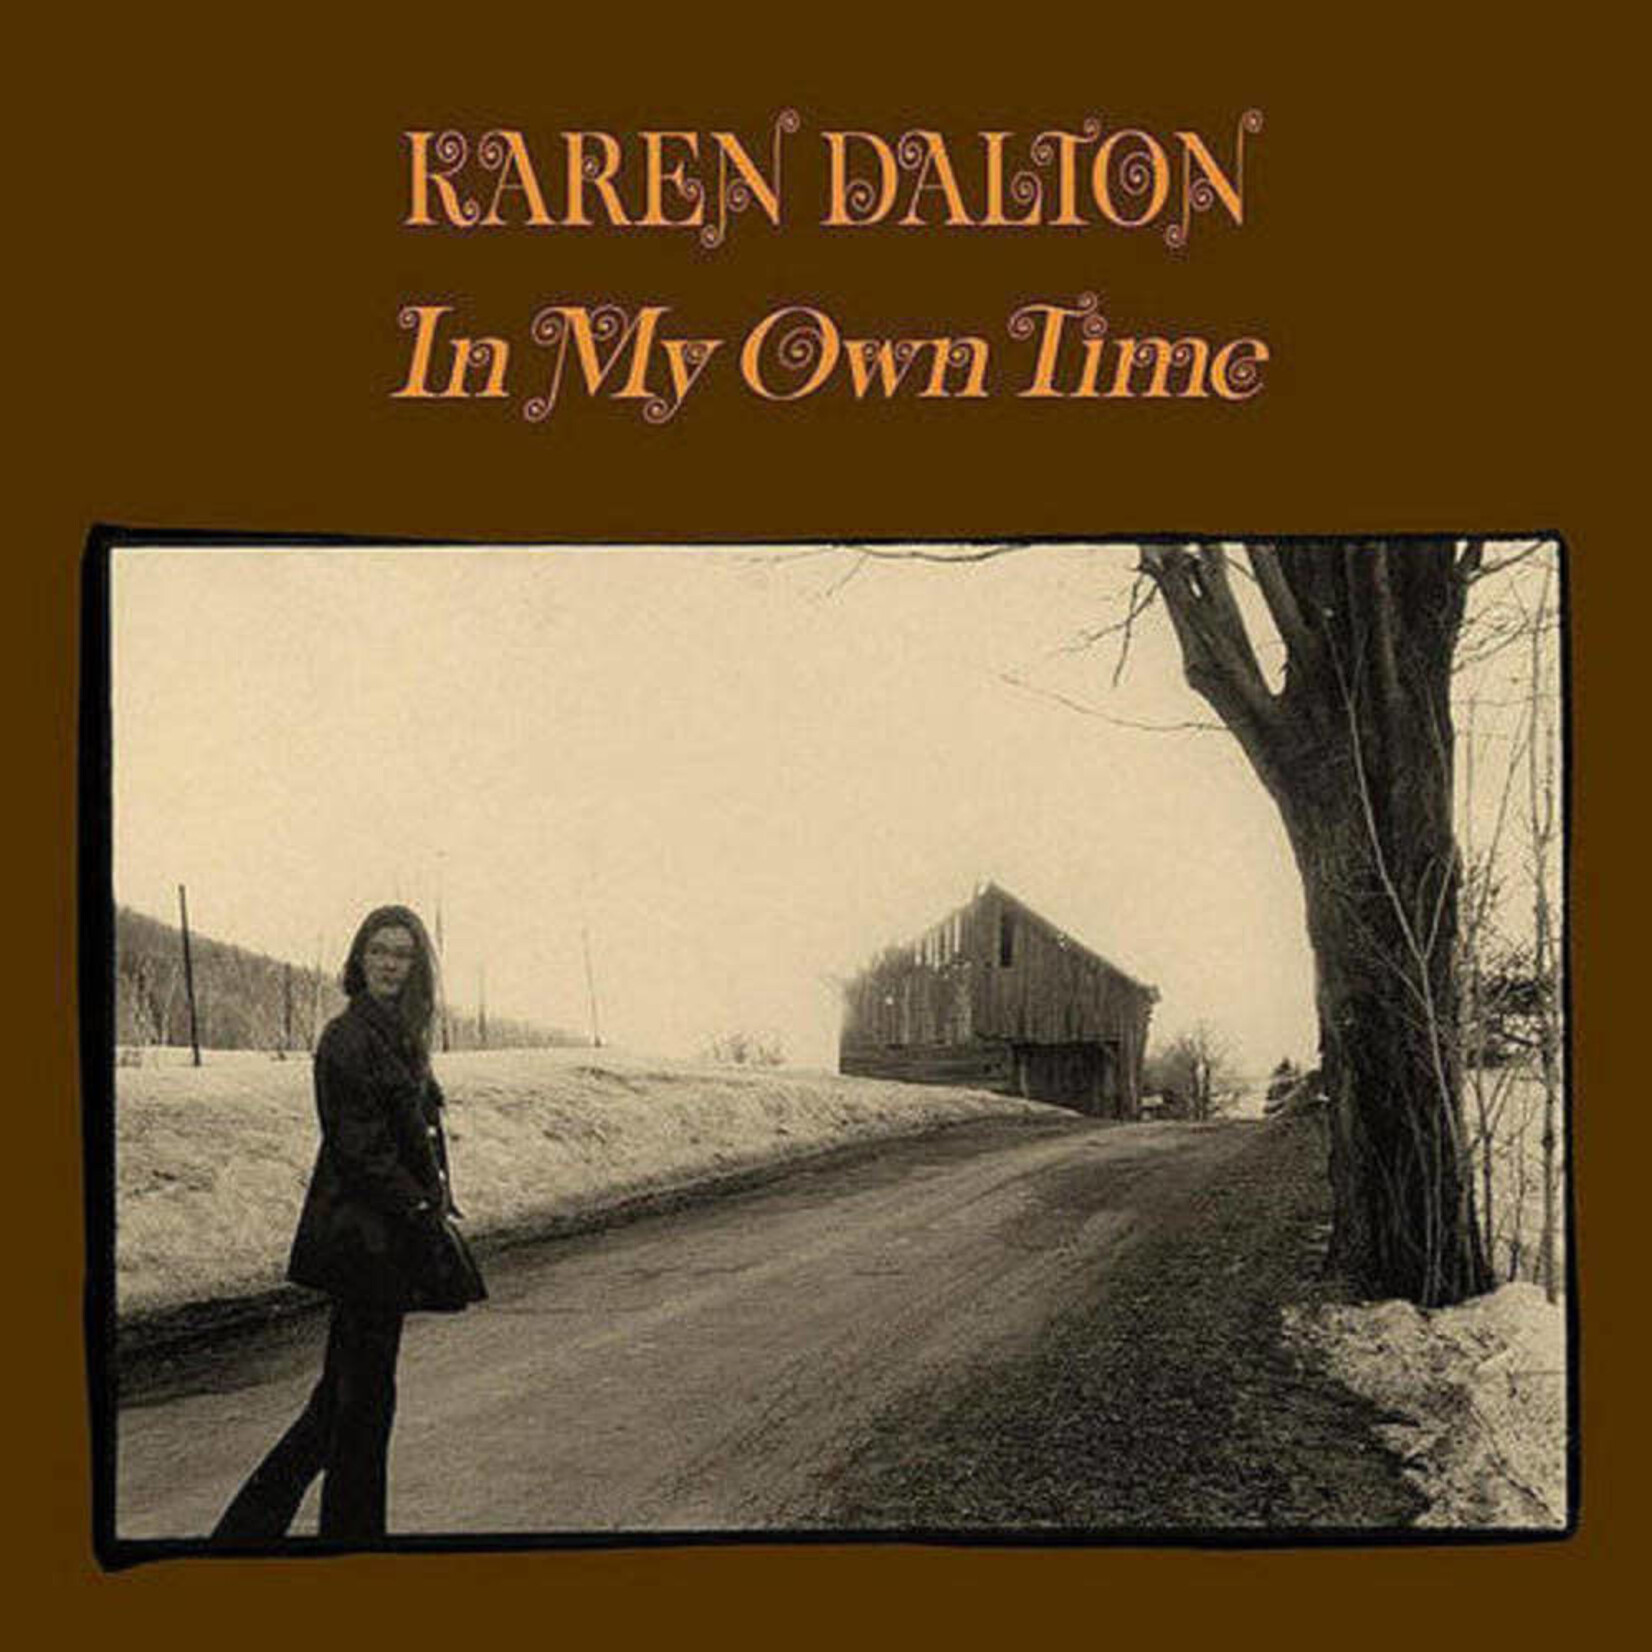 [New] Karen Dalton - In My Own Time (silver vinyl)